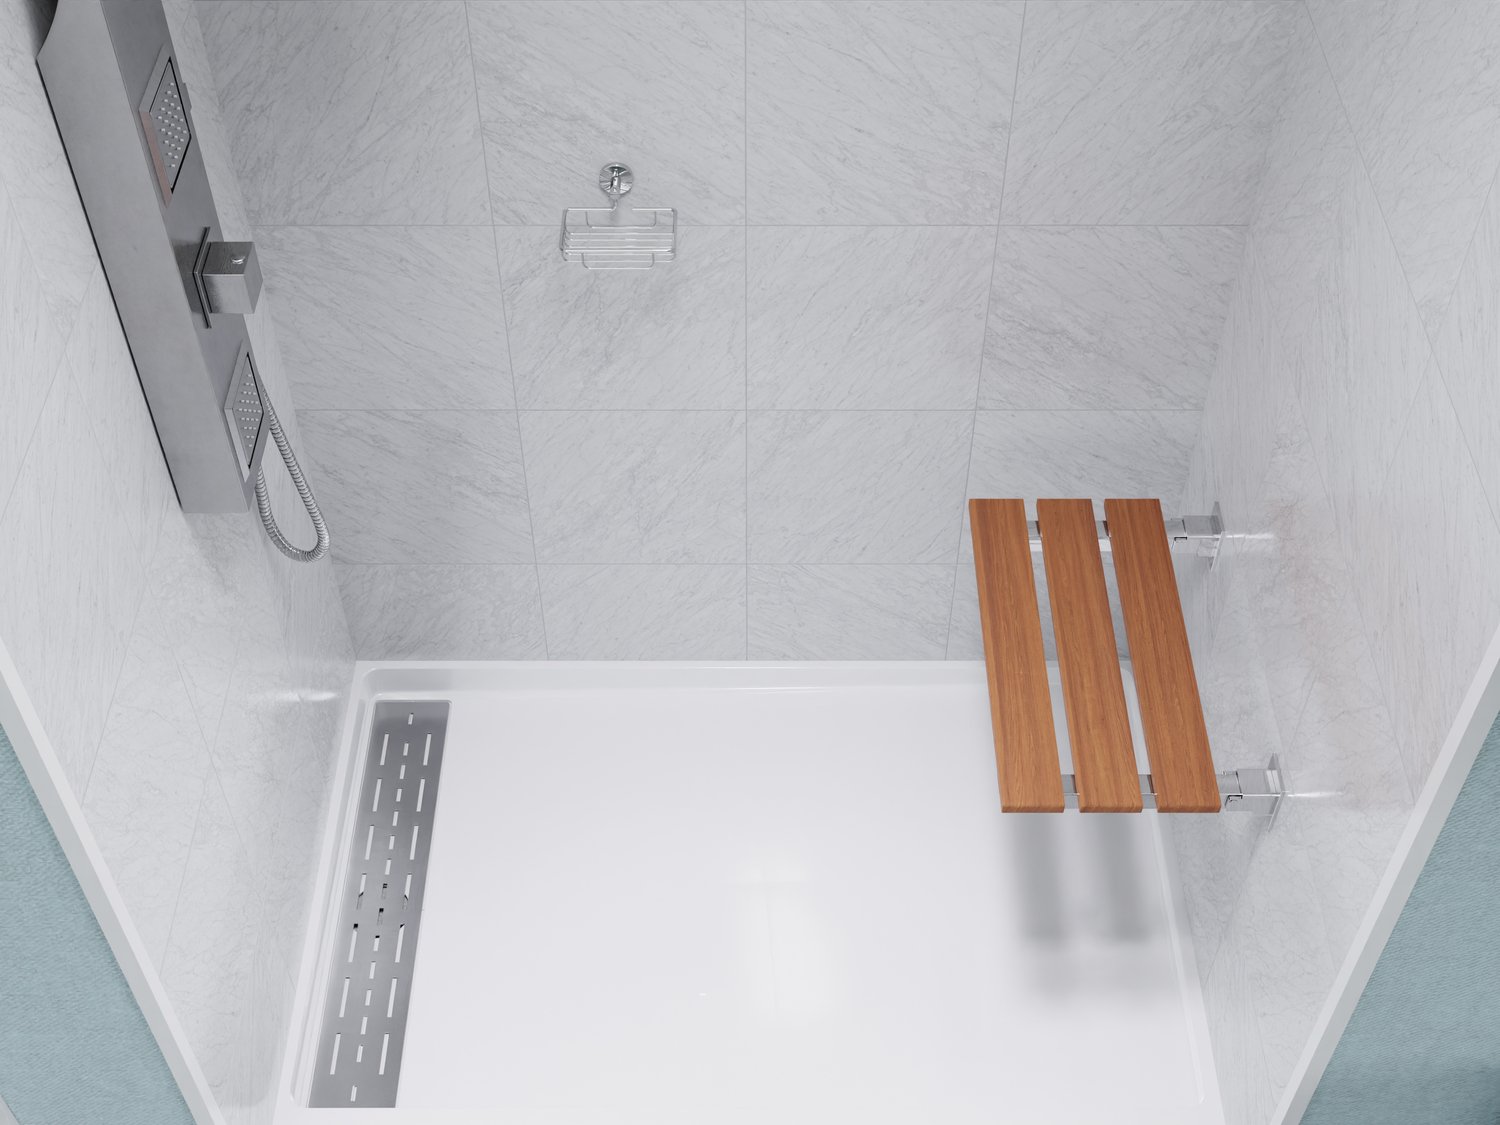 folding shower Anzzi BATHROOM - Bath Accessories - Shower Seats Teak